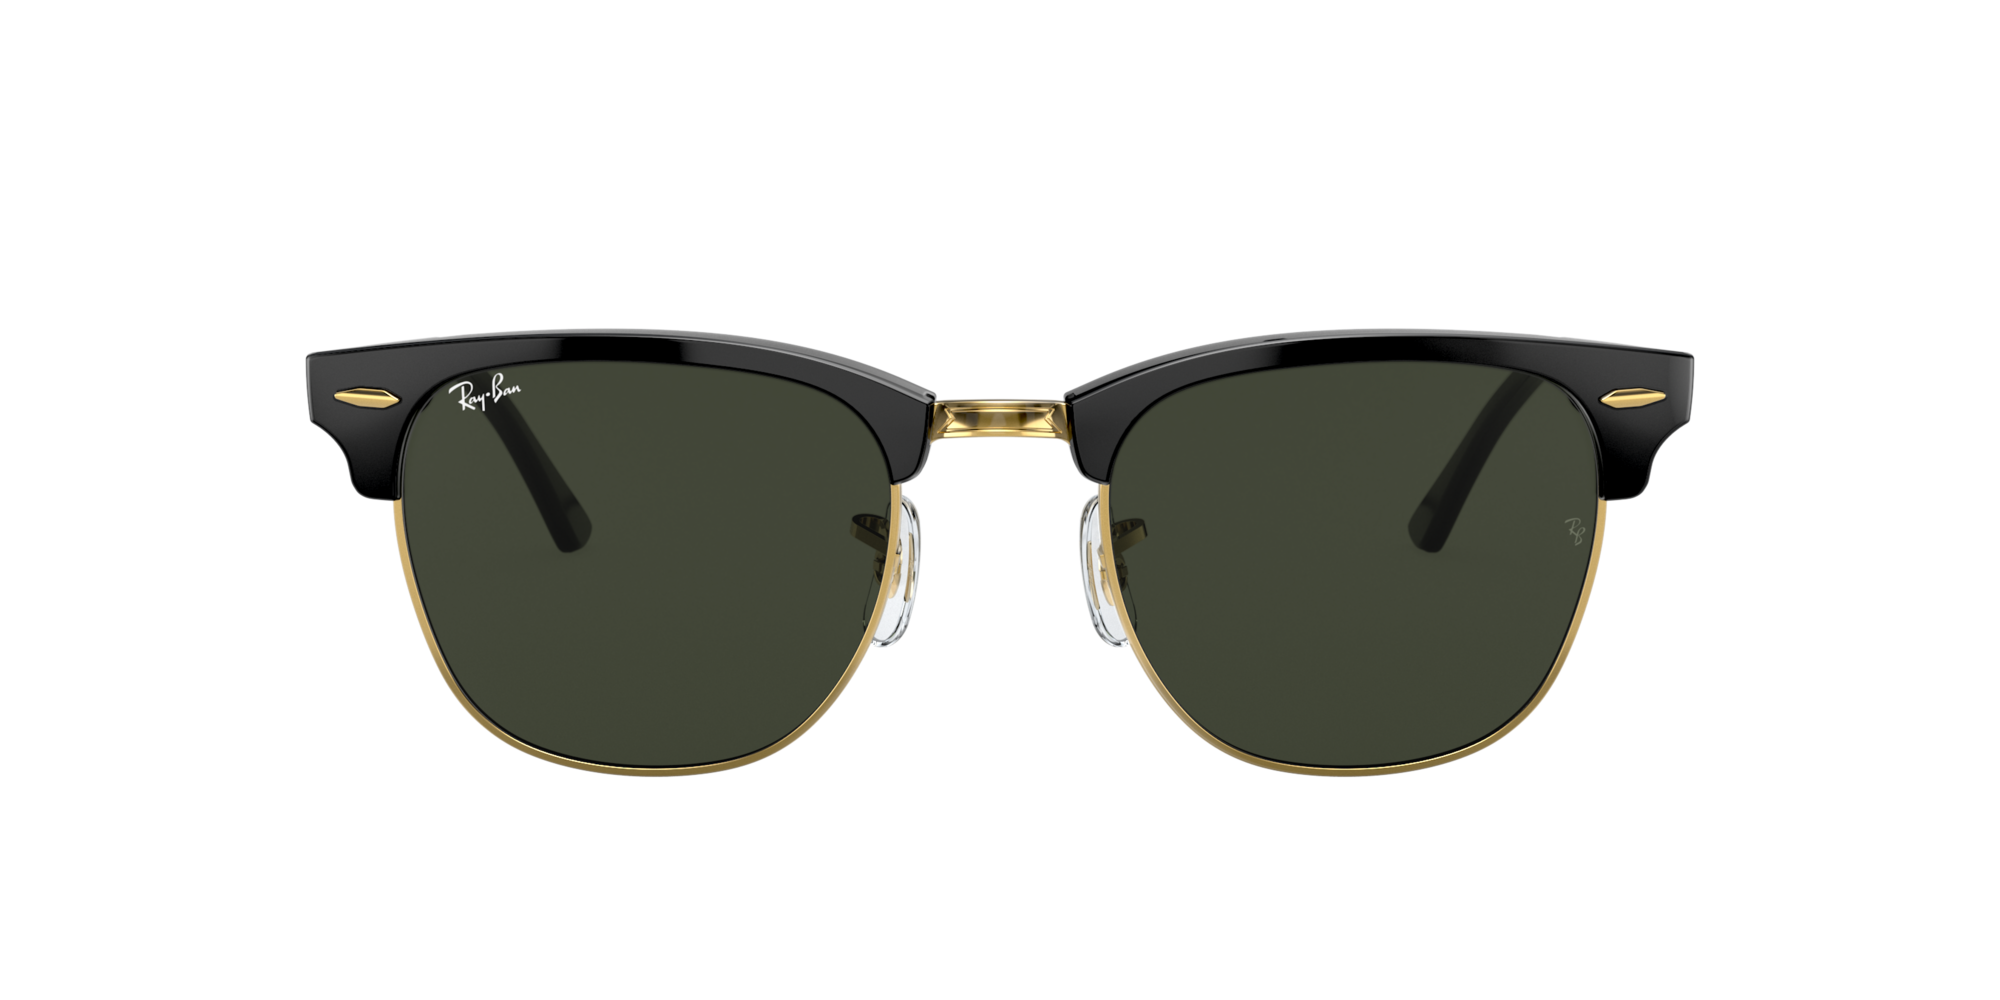 mens luxury sunglasses